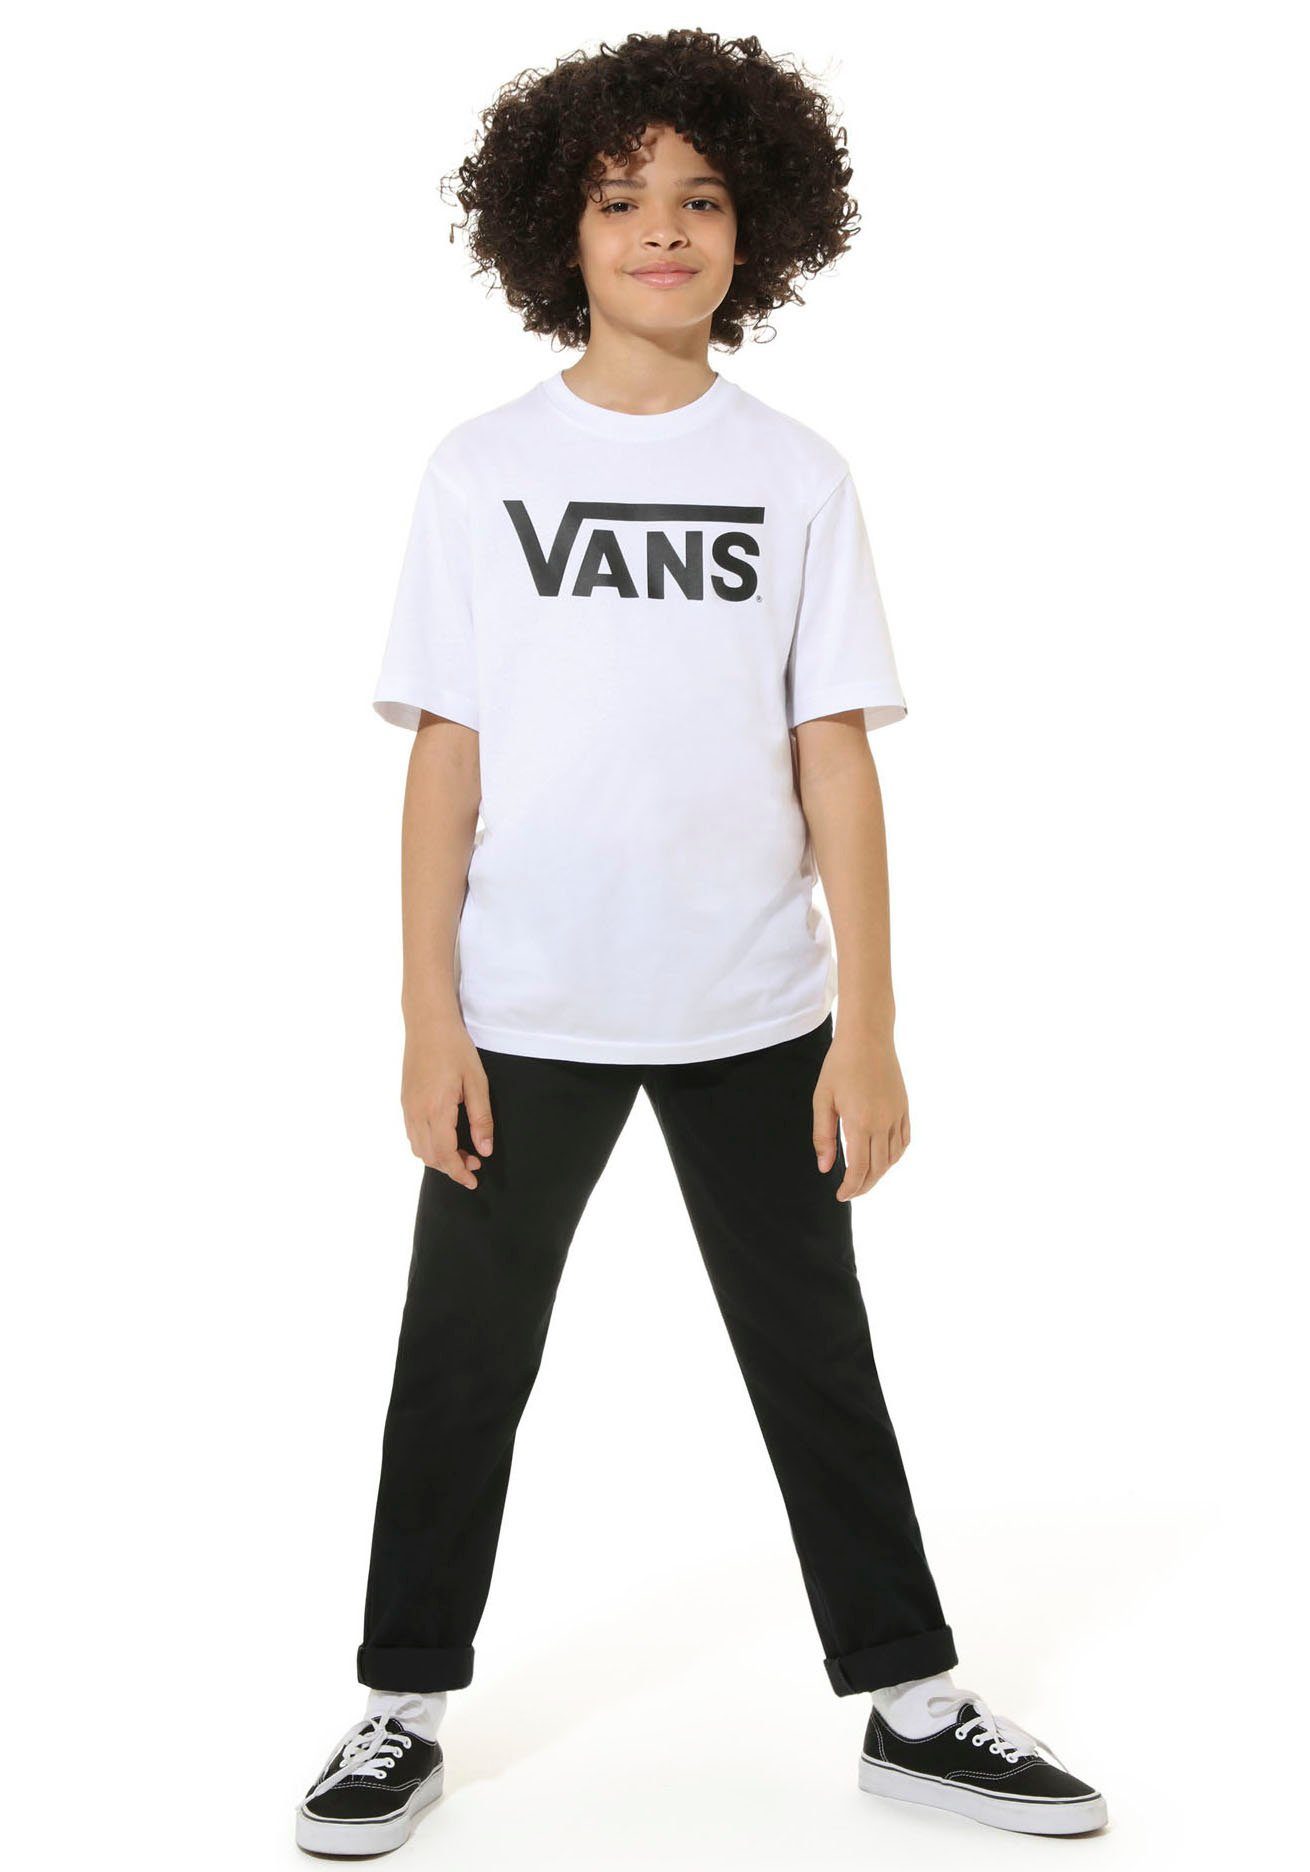 Vans T-Shirt VANS CLASSIC weiß BOYS